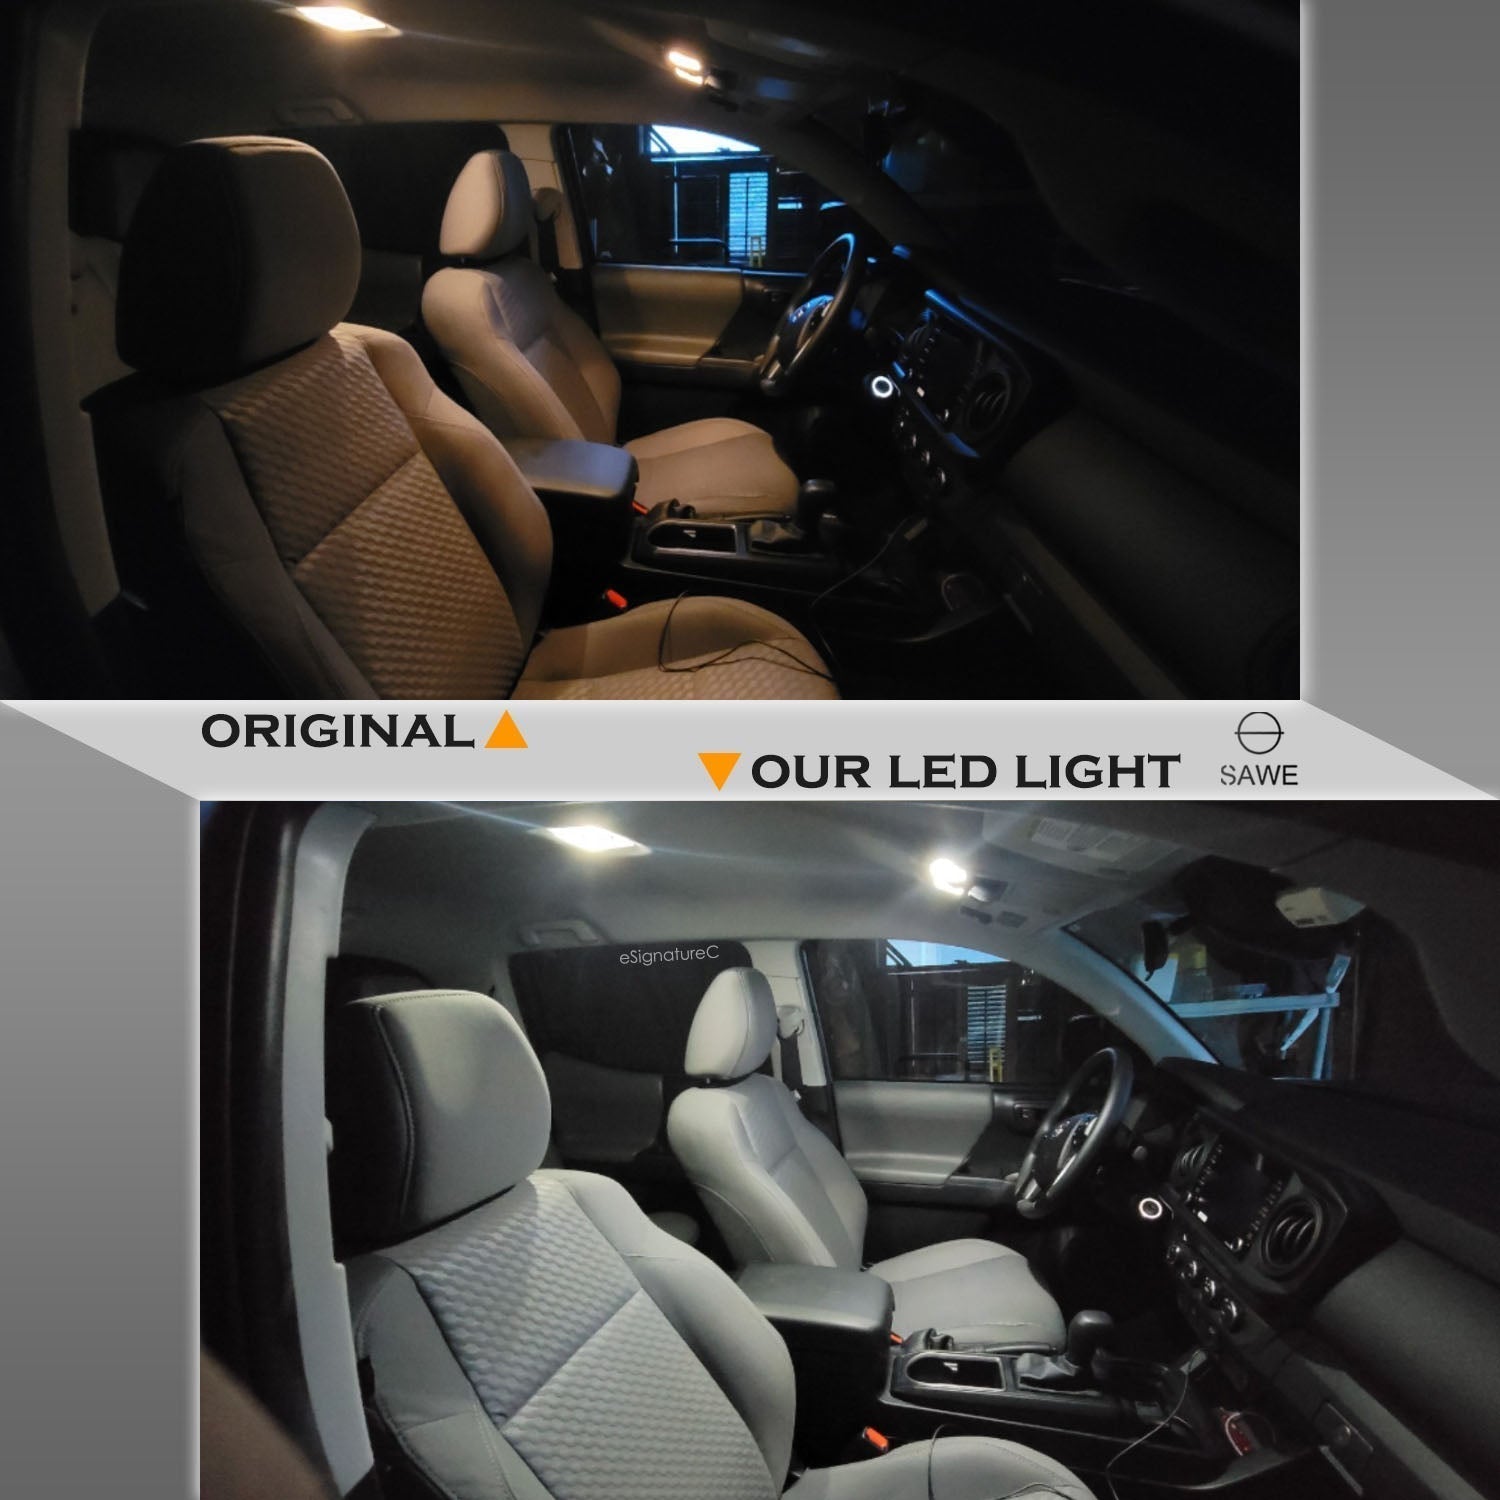 For Toyota CHR Interior LED Lights - Dome & Map Lights Package Kit for 2018 - 2022 - White